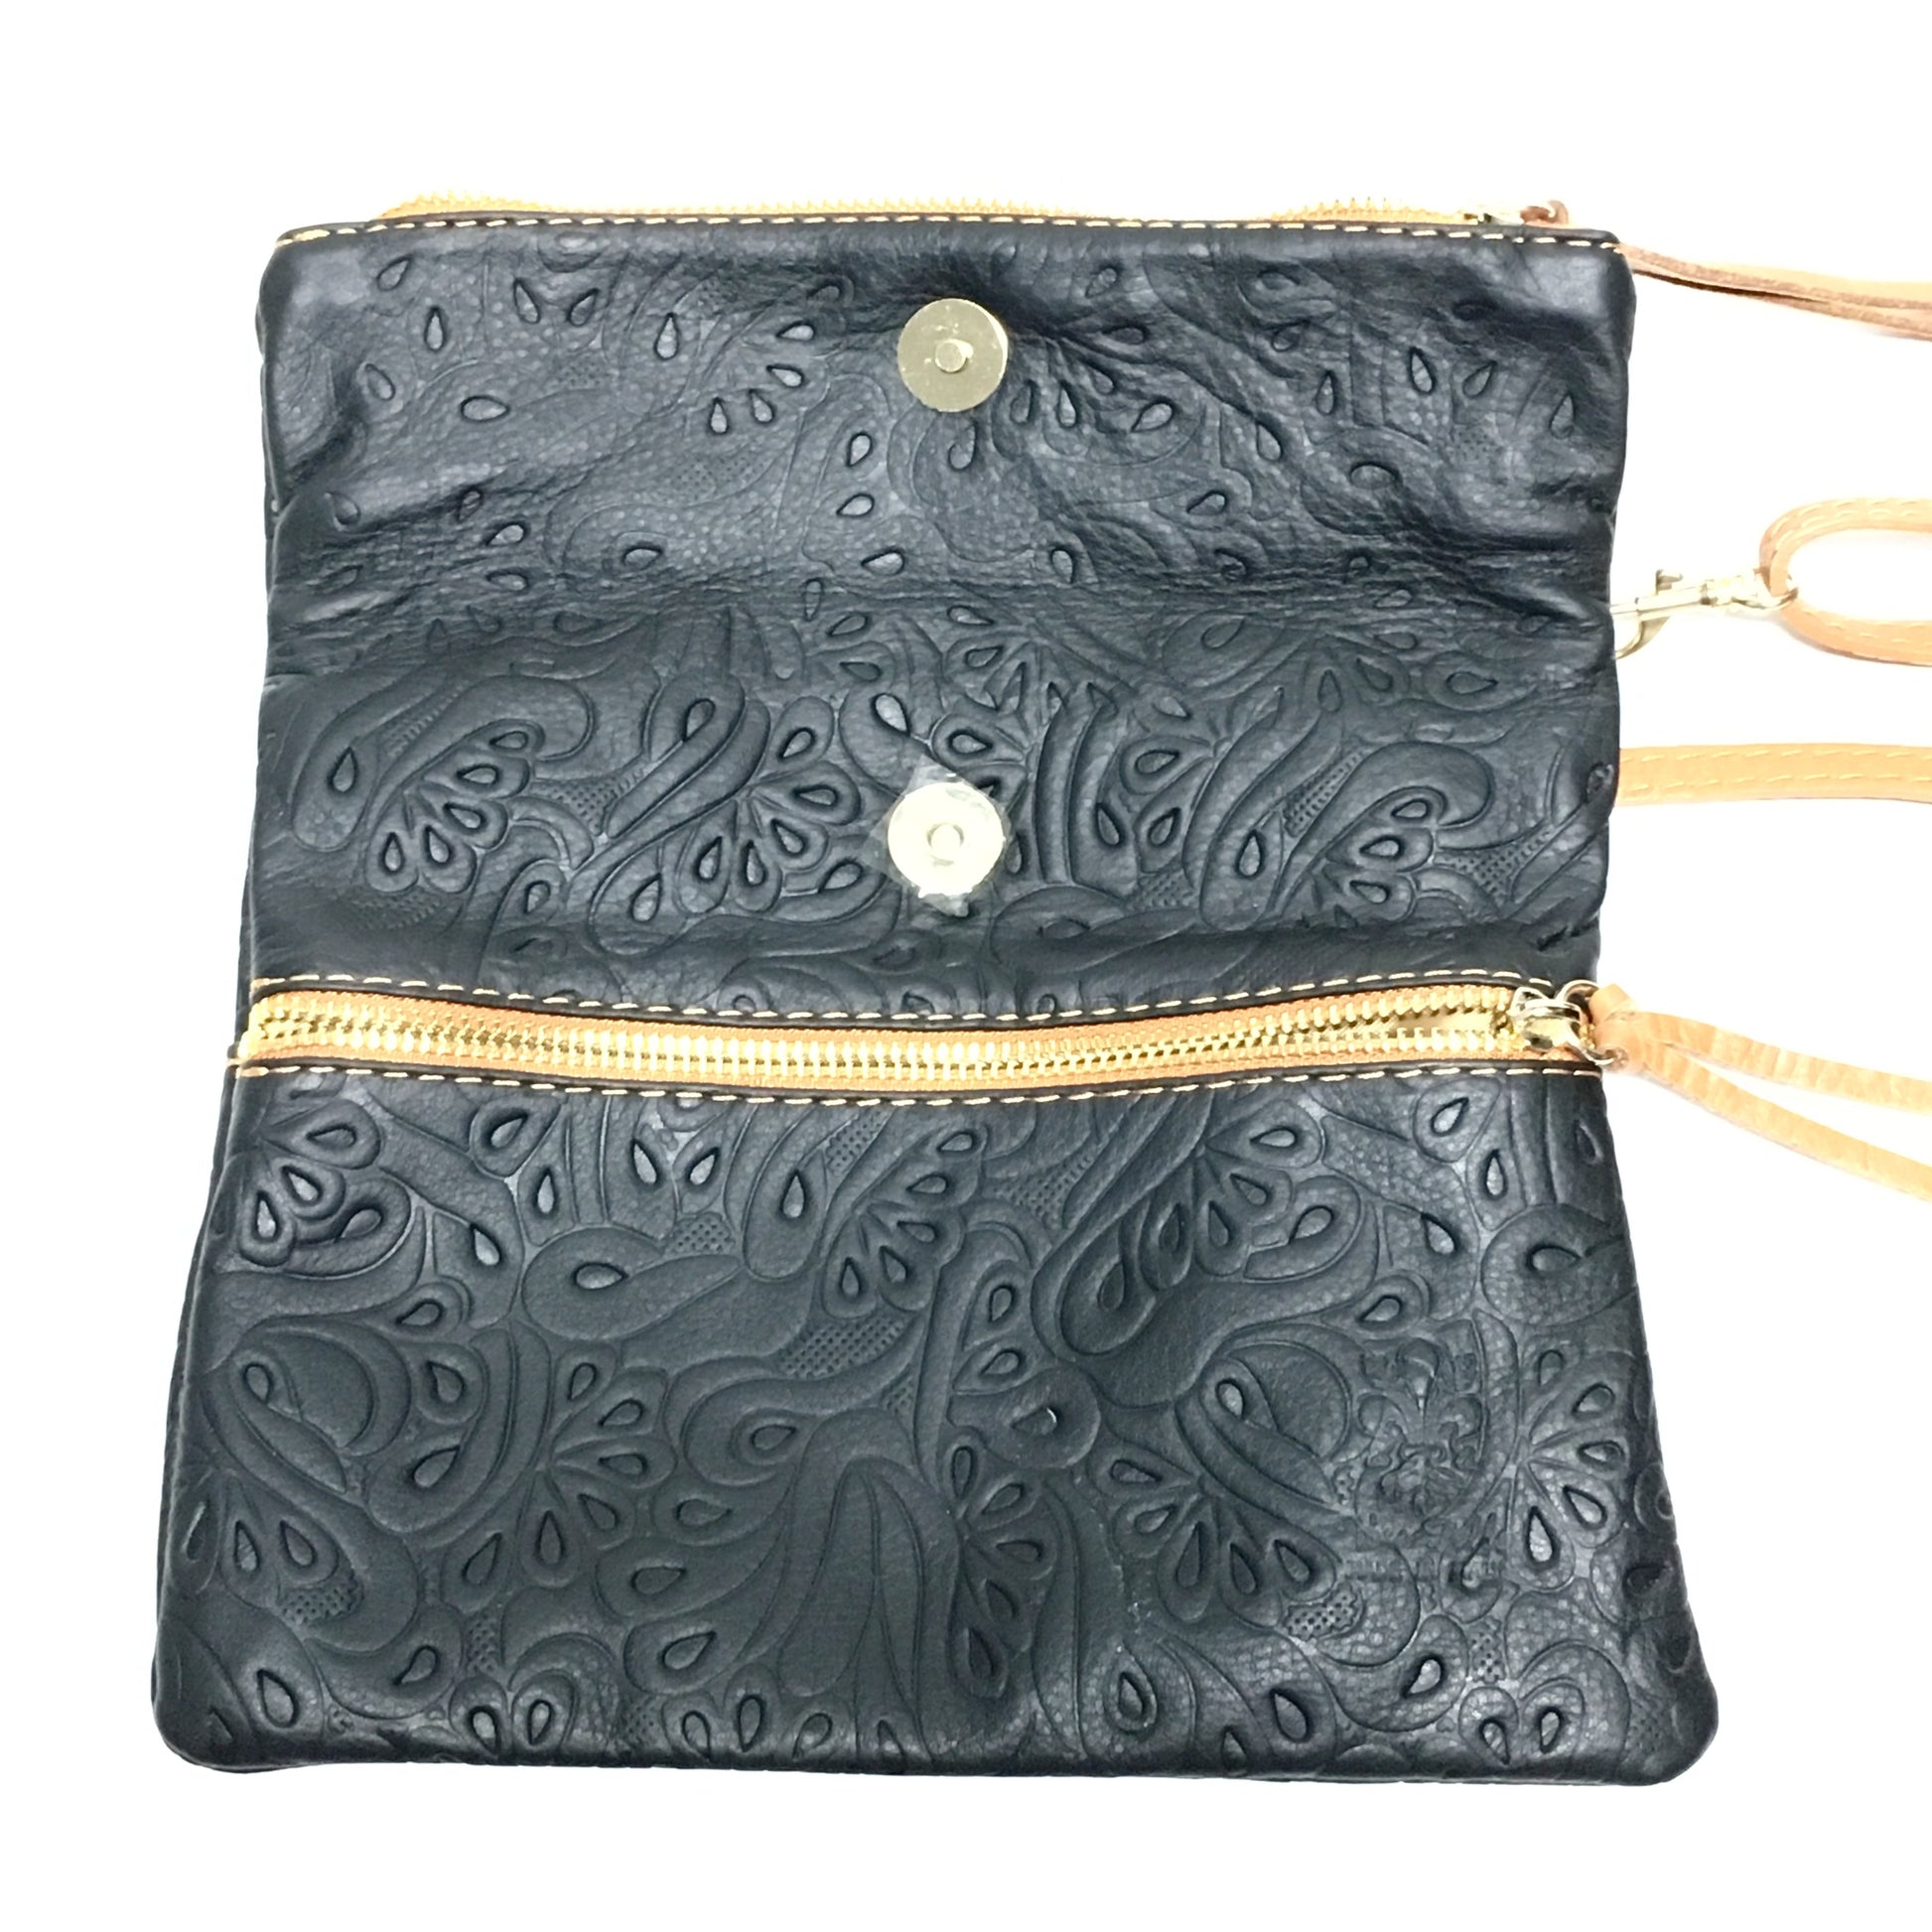 tooled black and tan italian leather purse open